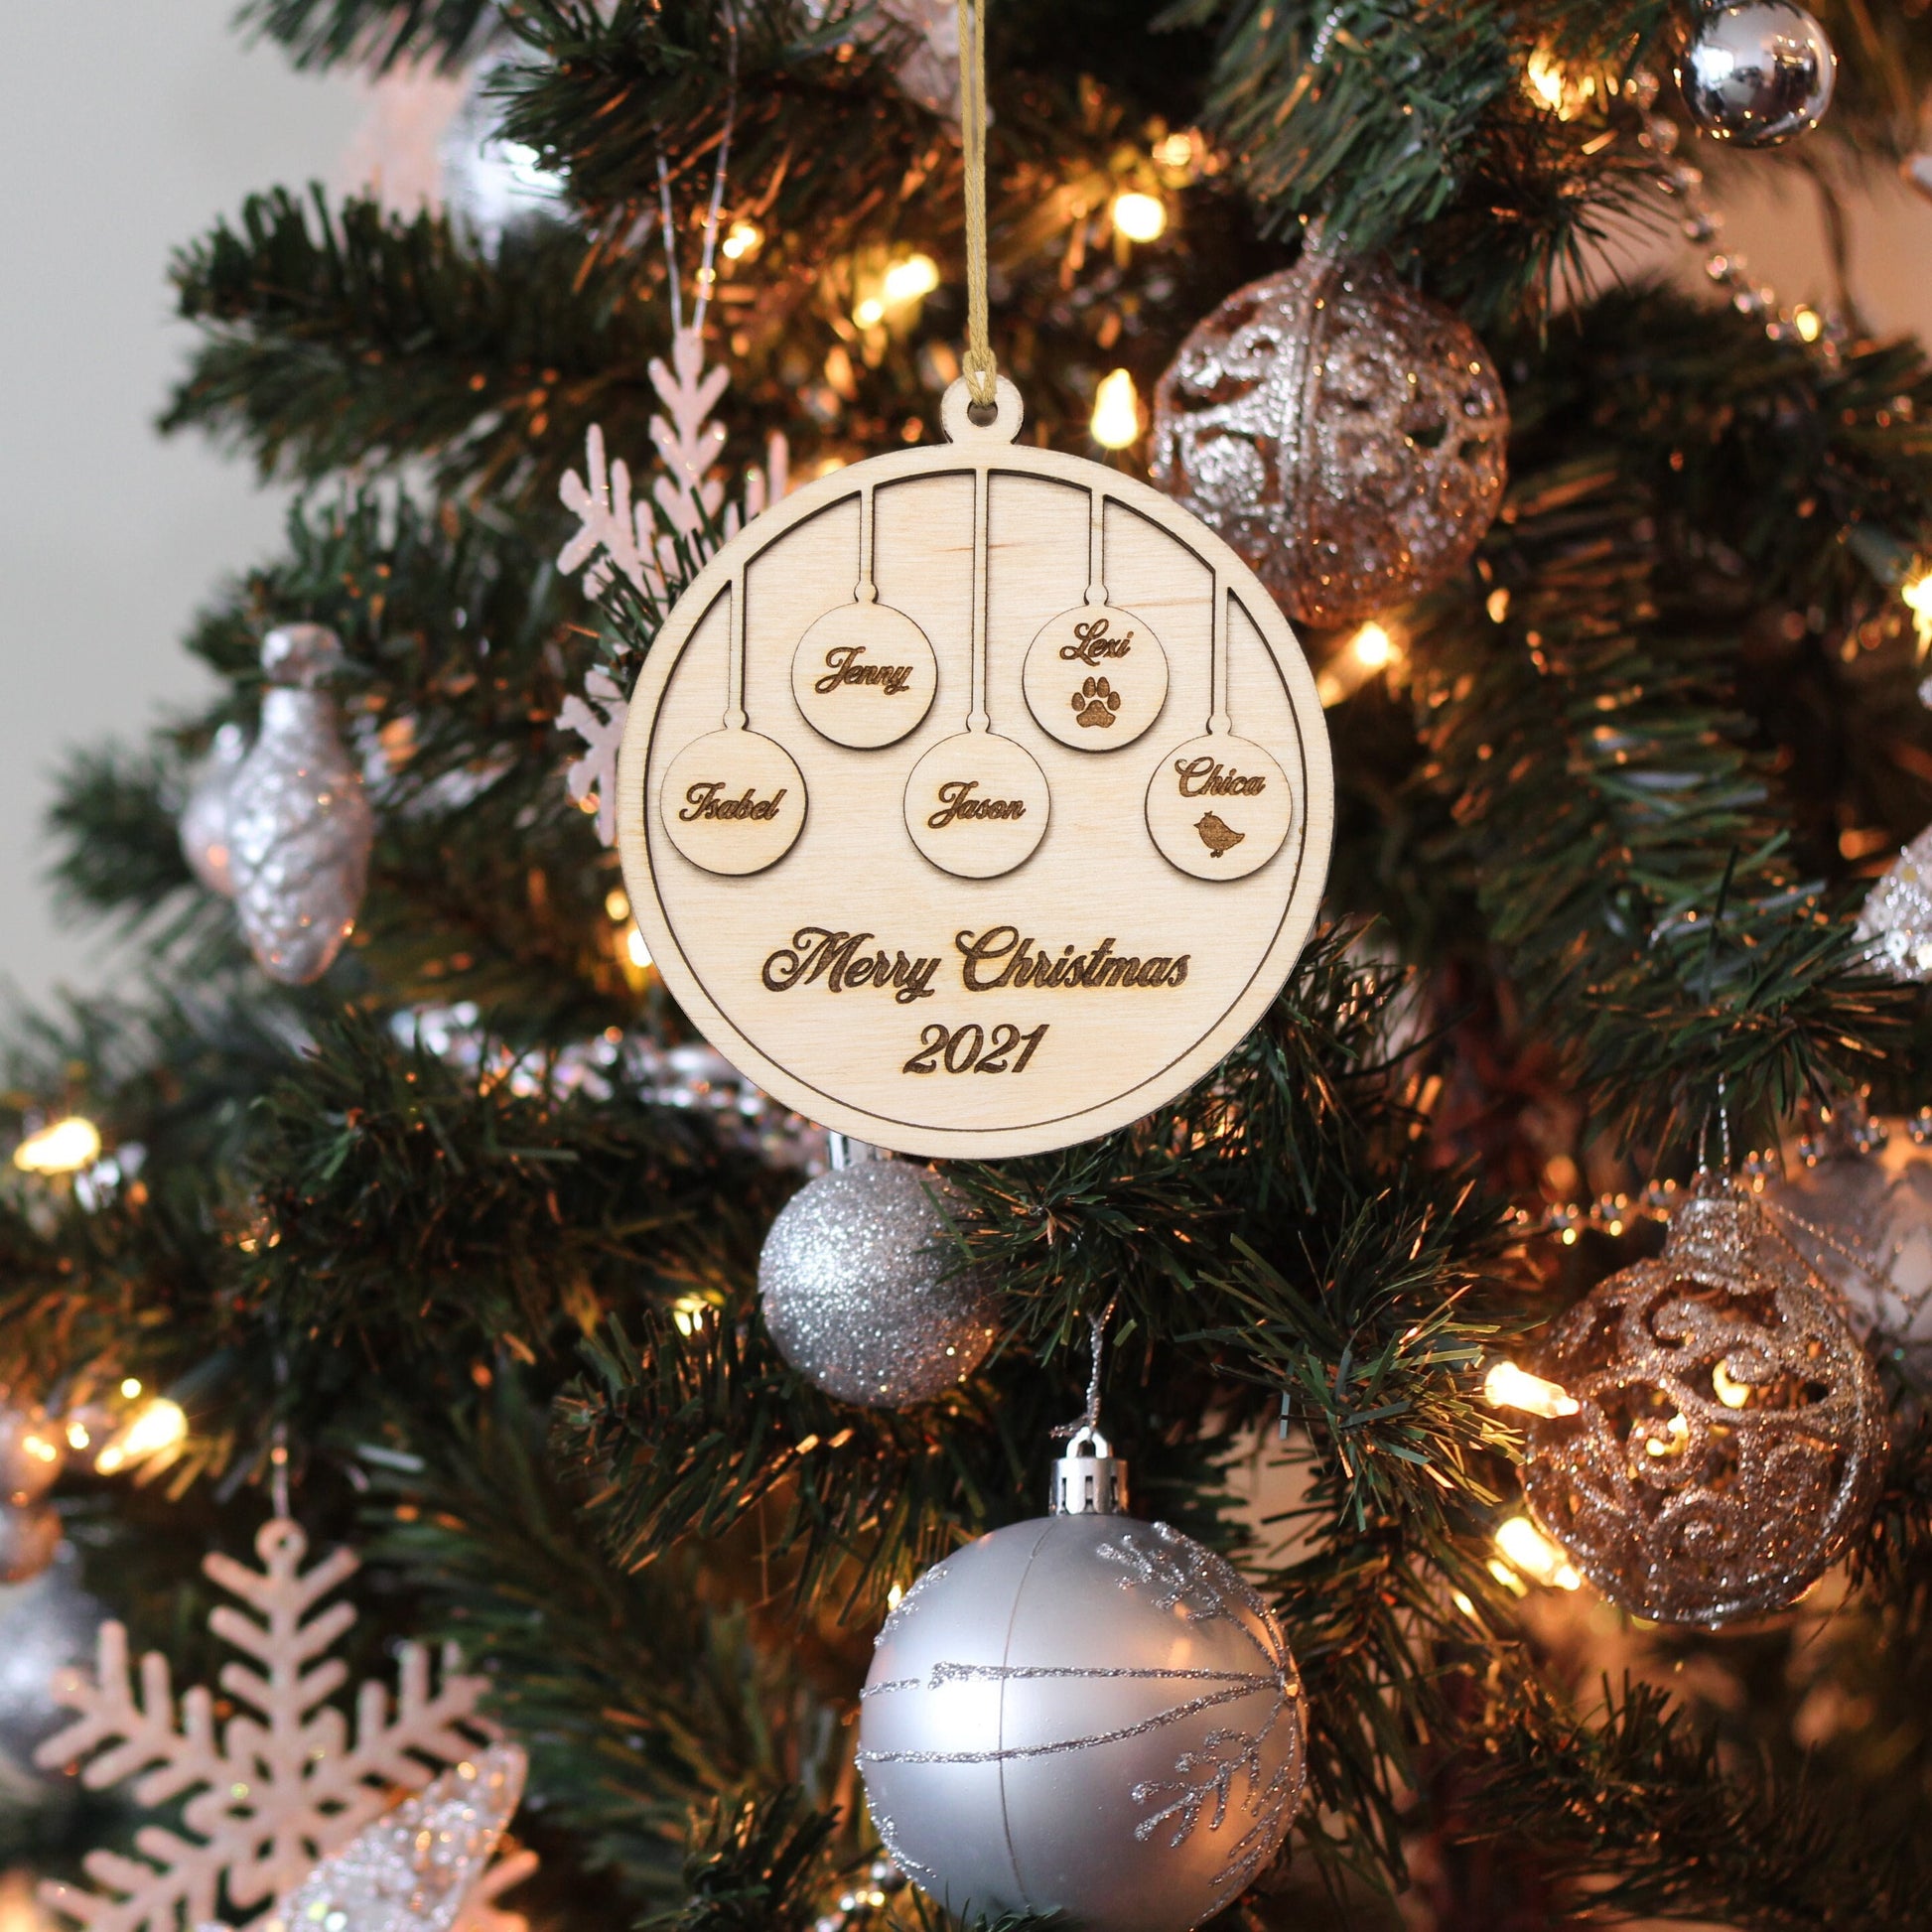 Personalized Custom Wood Ornaments